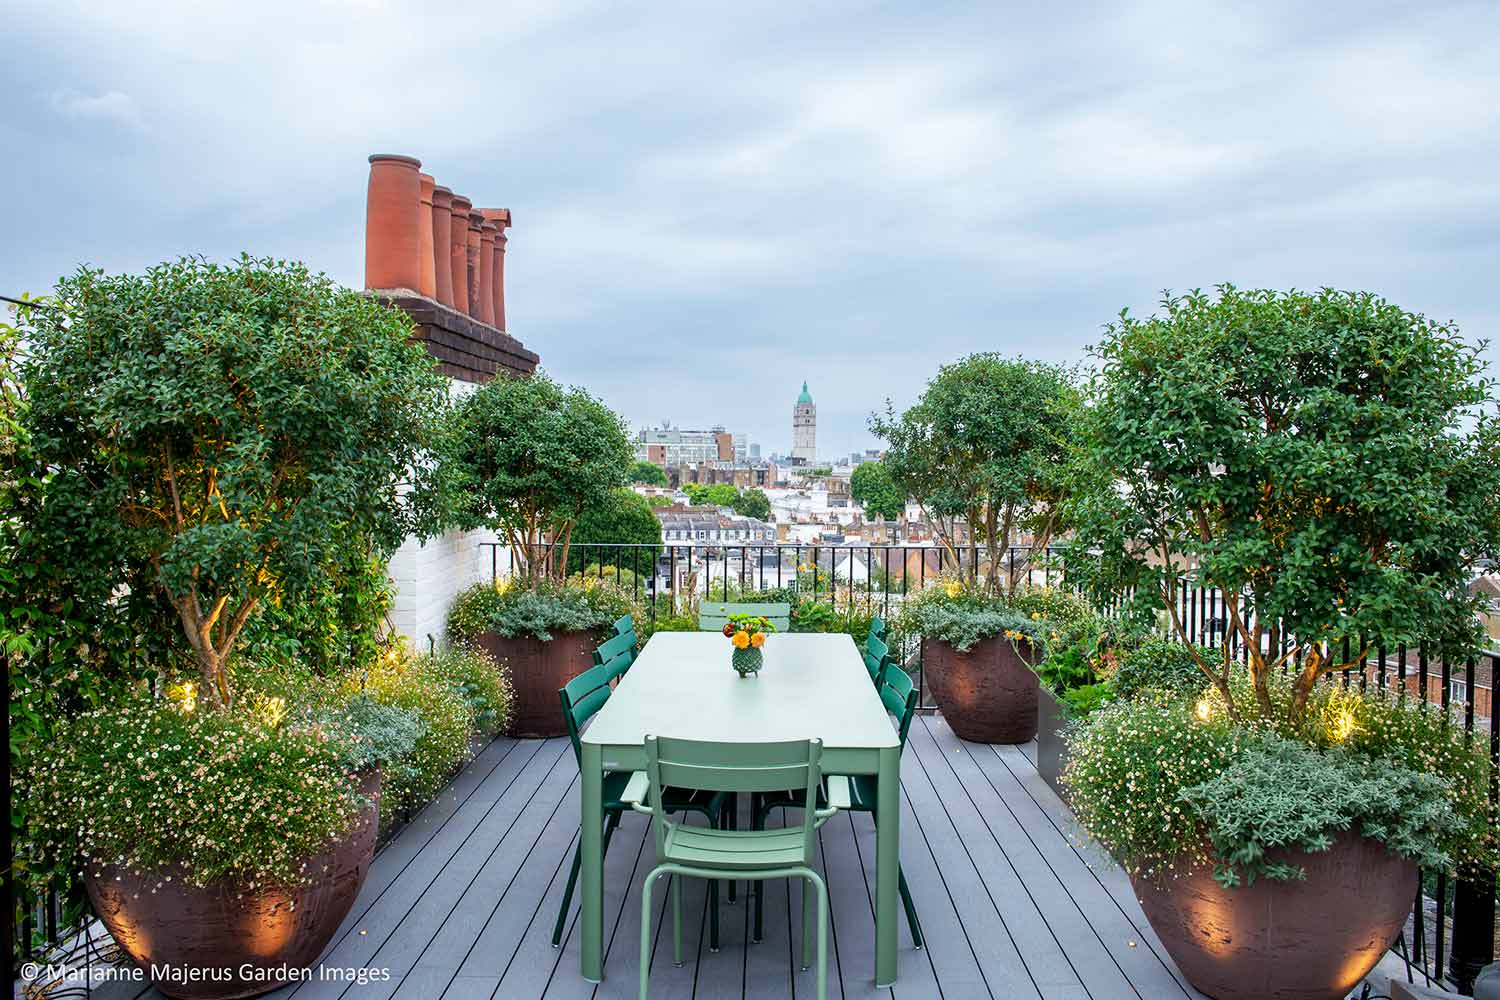 Kensington Roof Terrace designed by Maïtanne Hunt